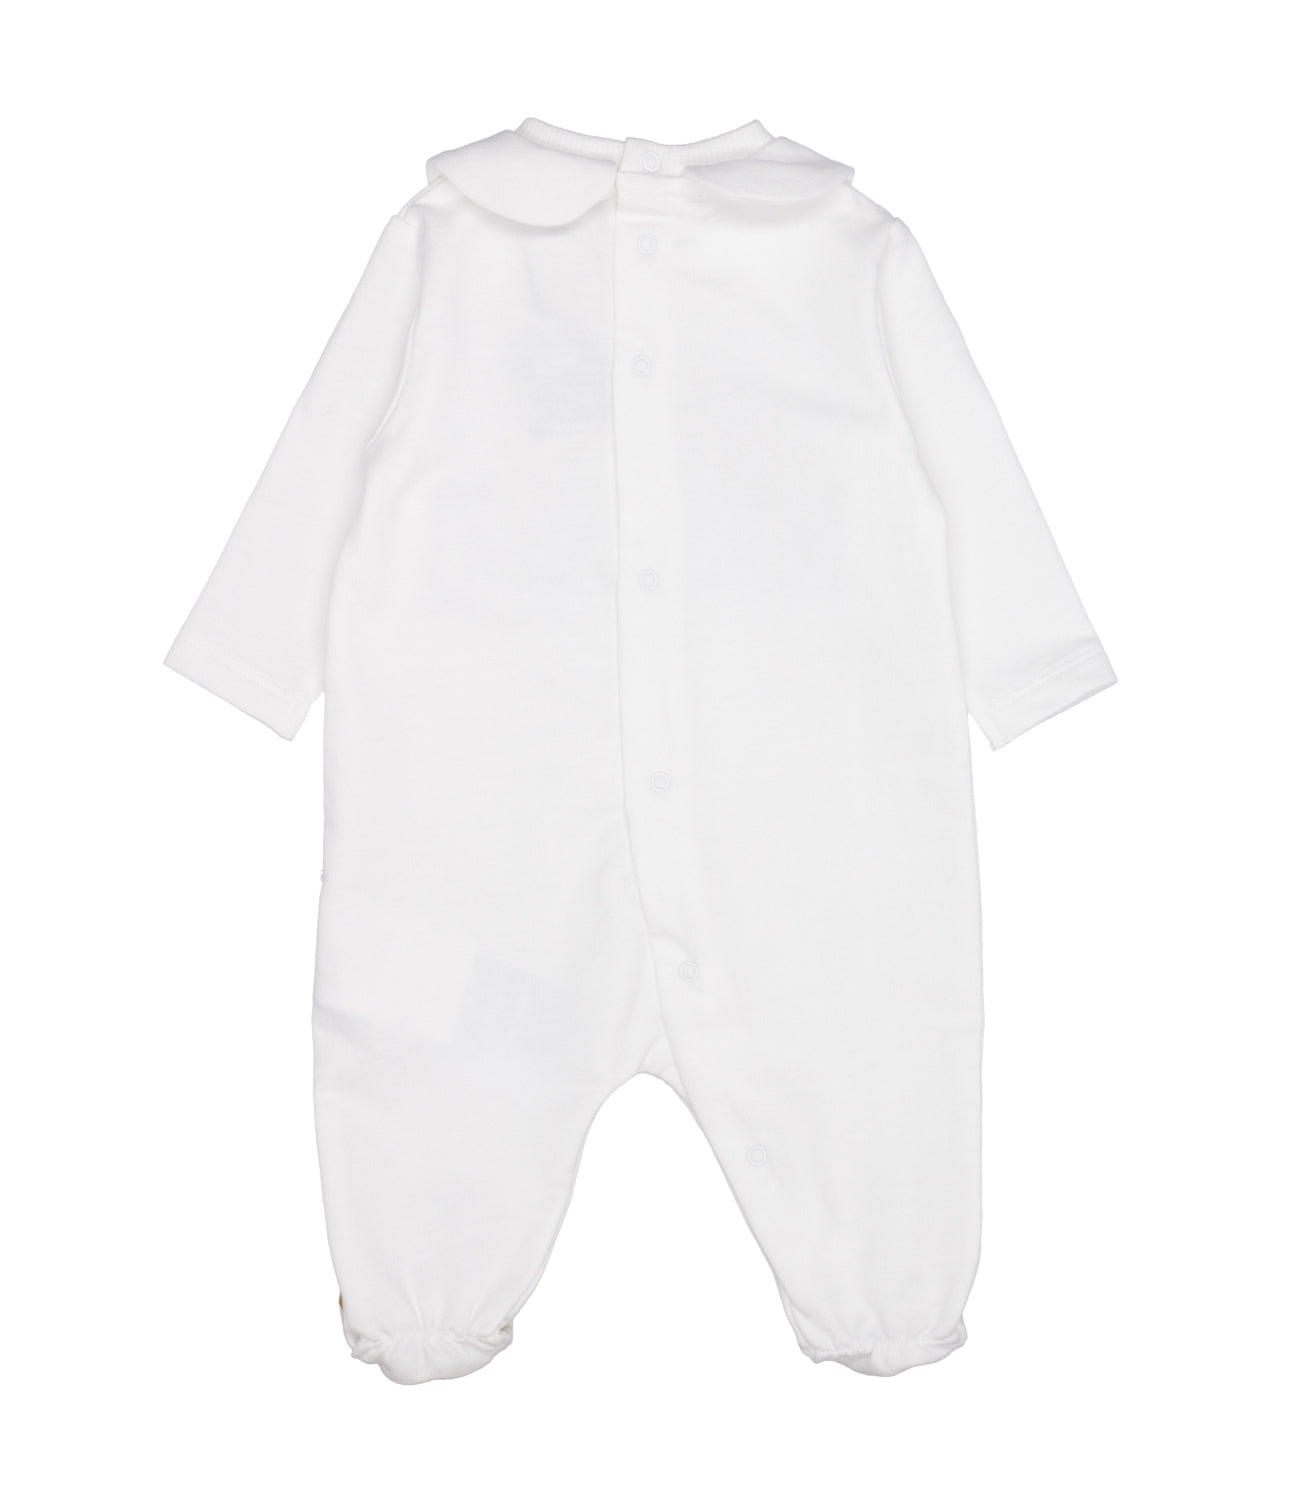 Moschino Baby | Optical White Sleepsuit